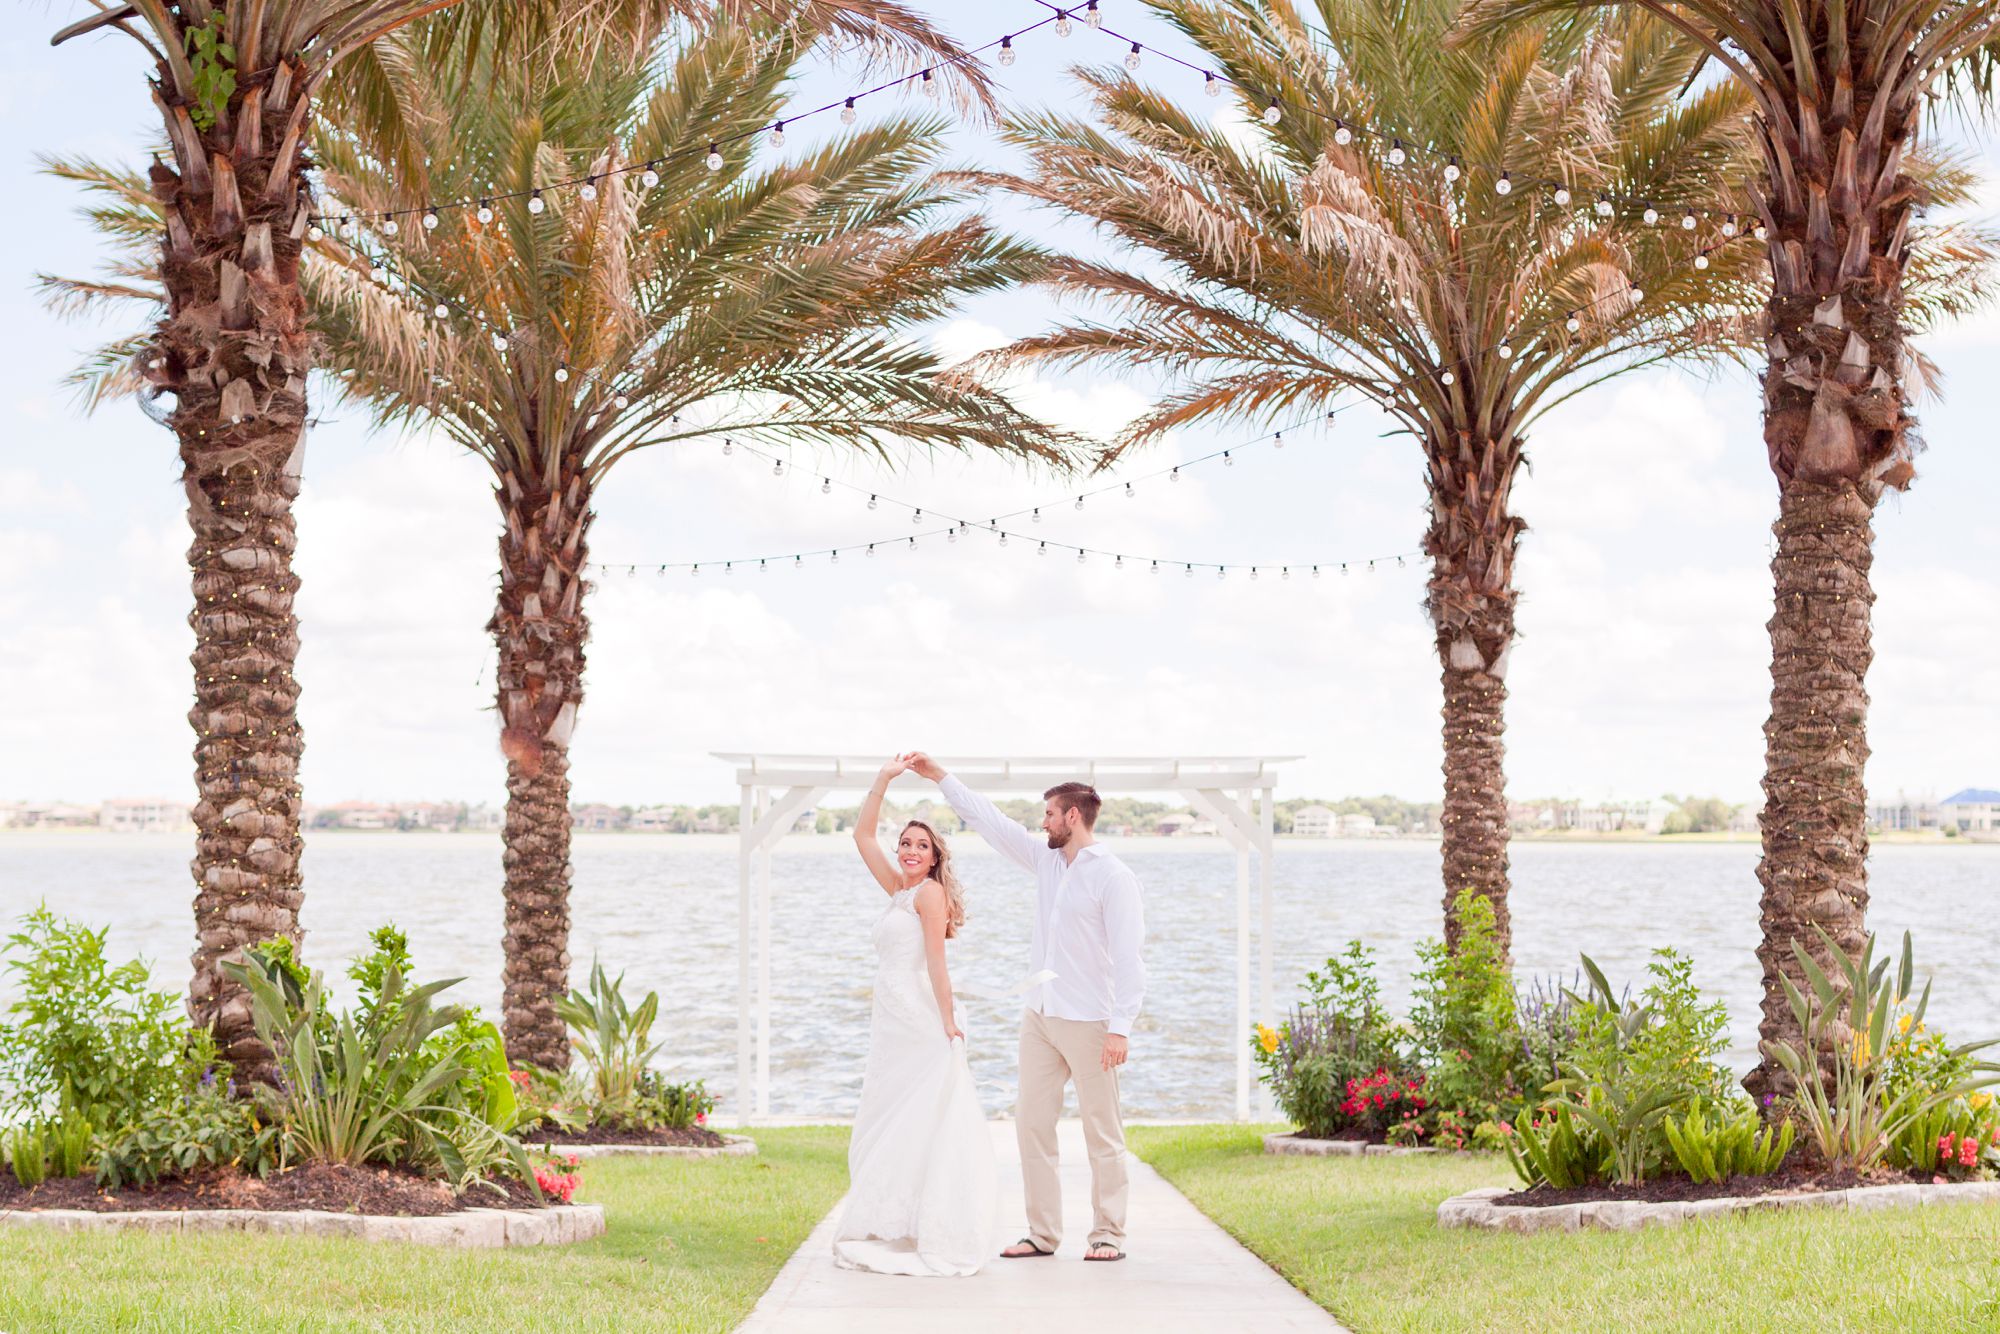 Bride and groom dance under palm trees at Waters Edge wedding venue in El Lago, Texas.